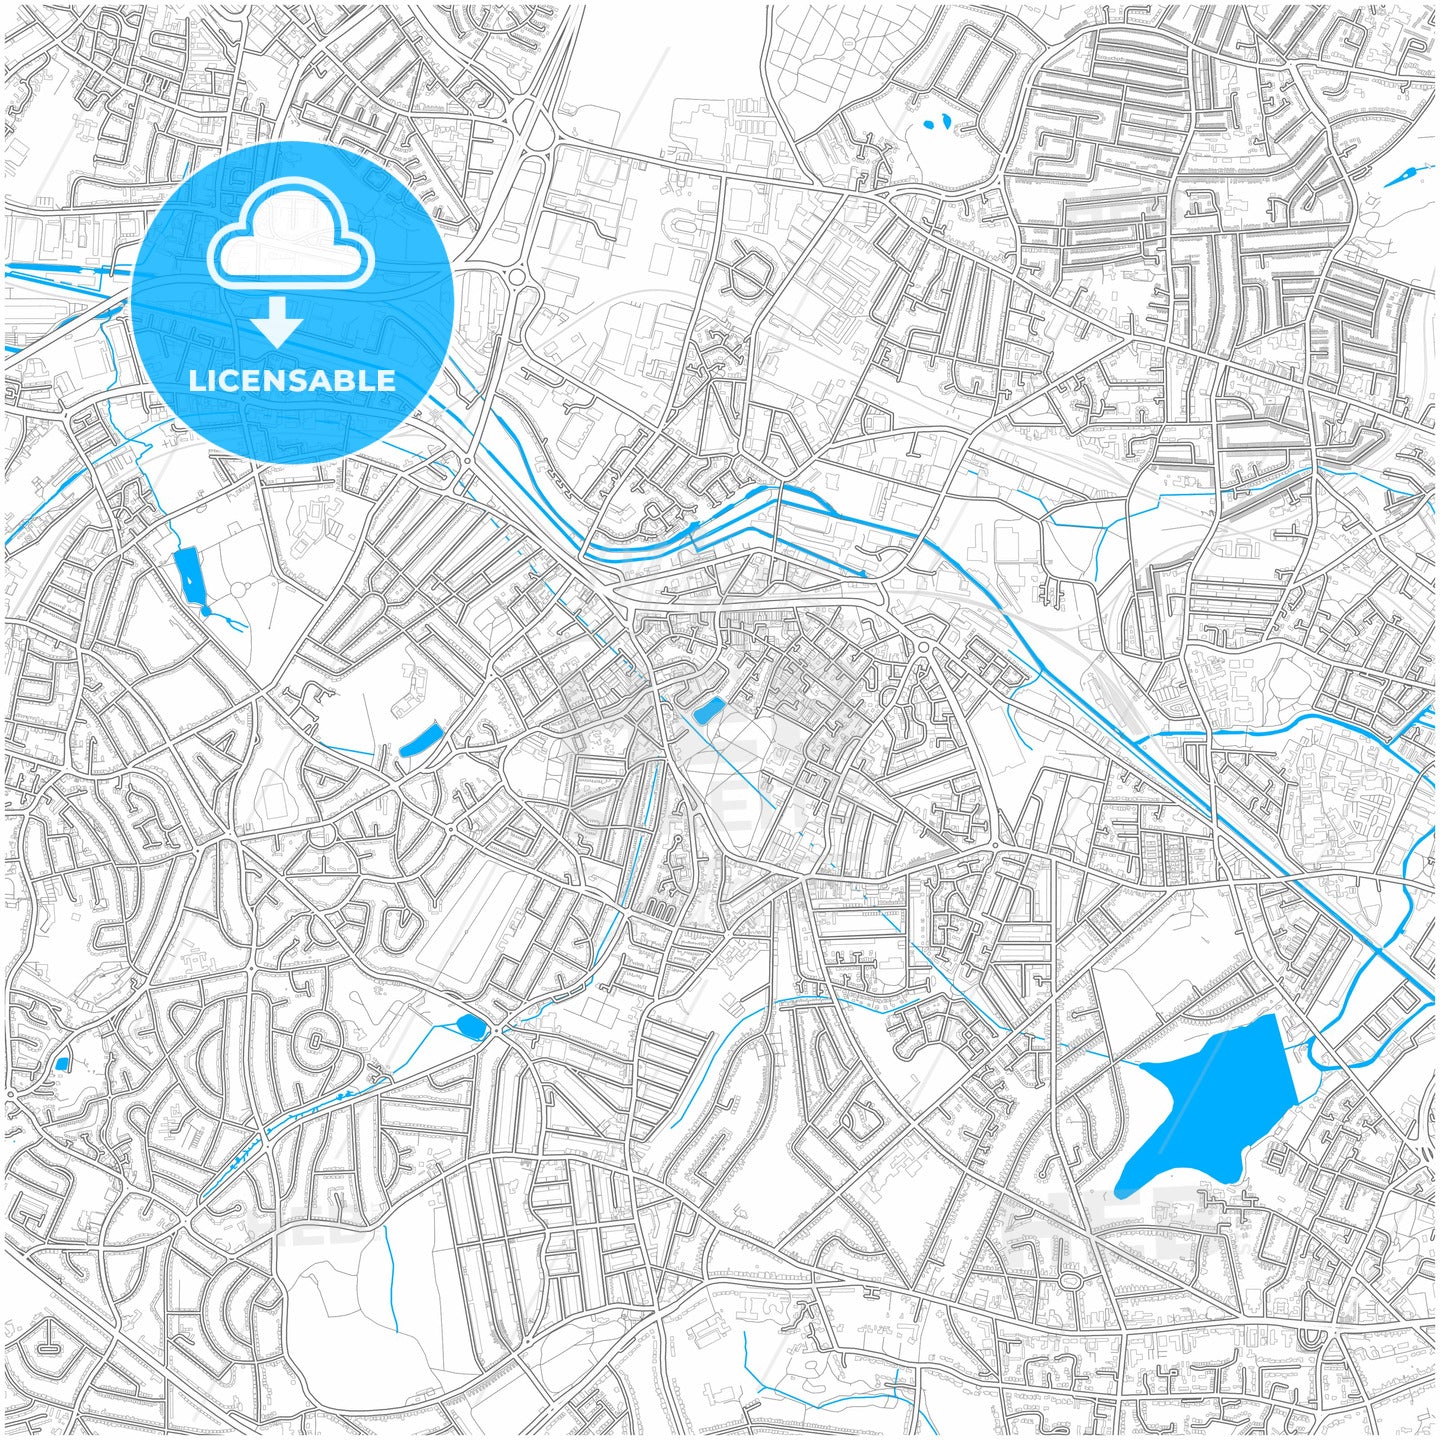 Smethwick, North West England, England, city map with high quality roads.